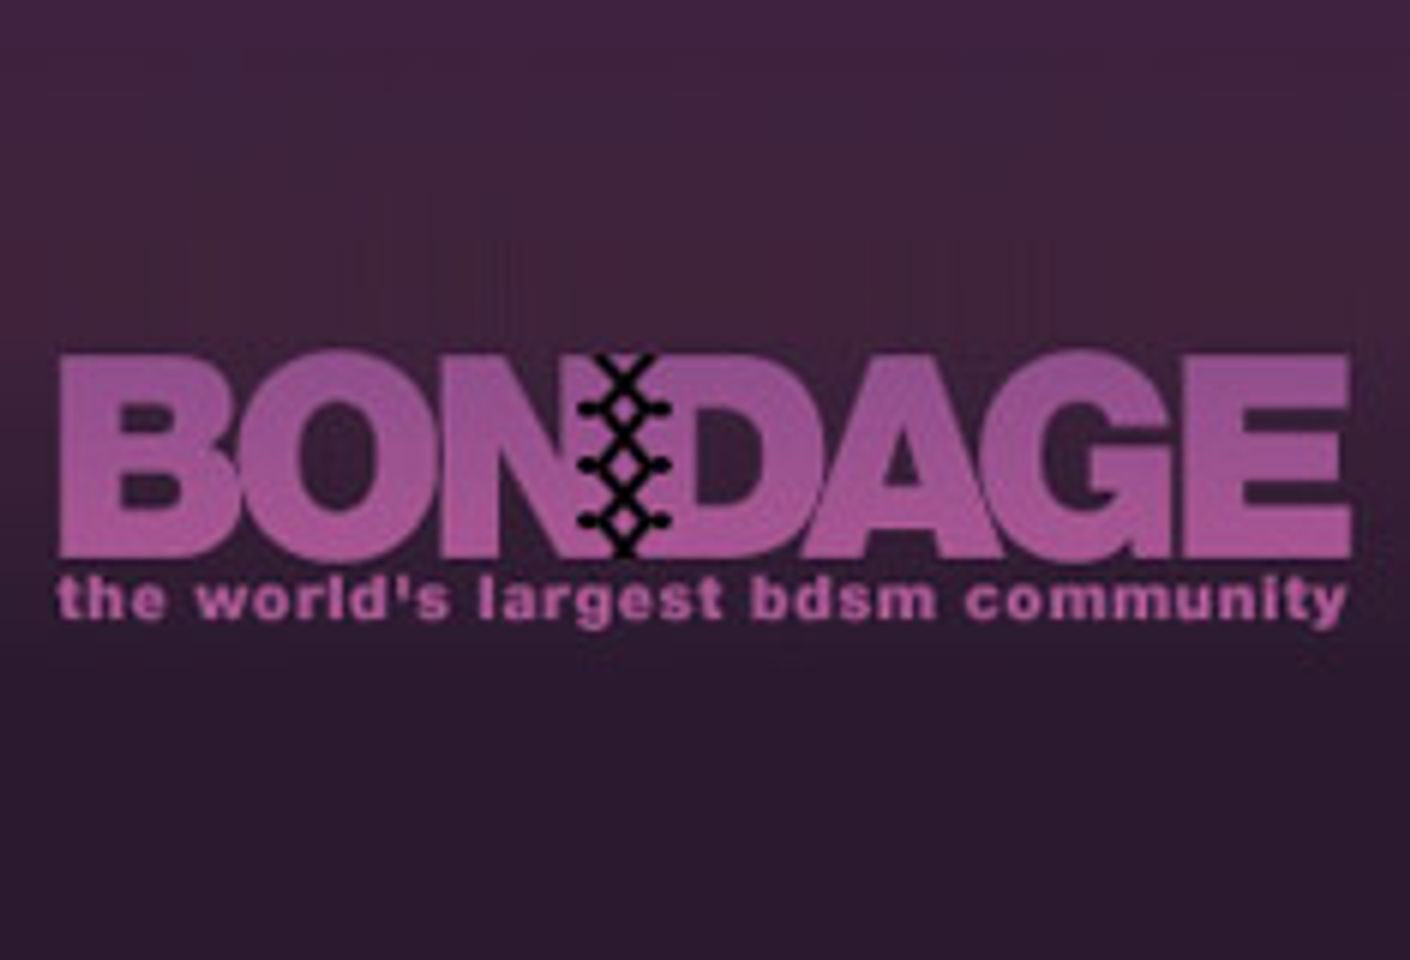 Bondage.com Redesigned, Re-branded